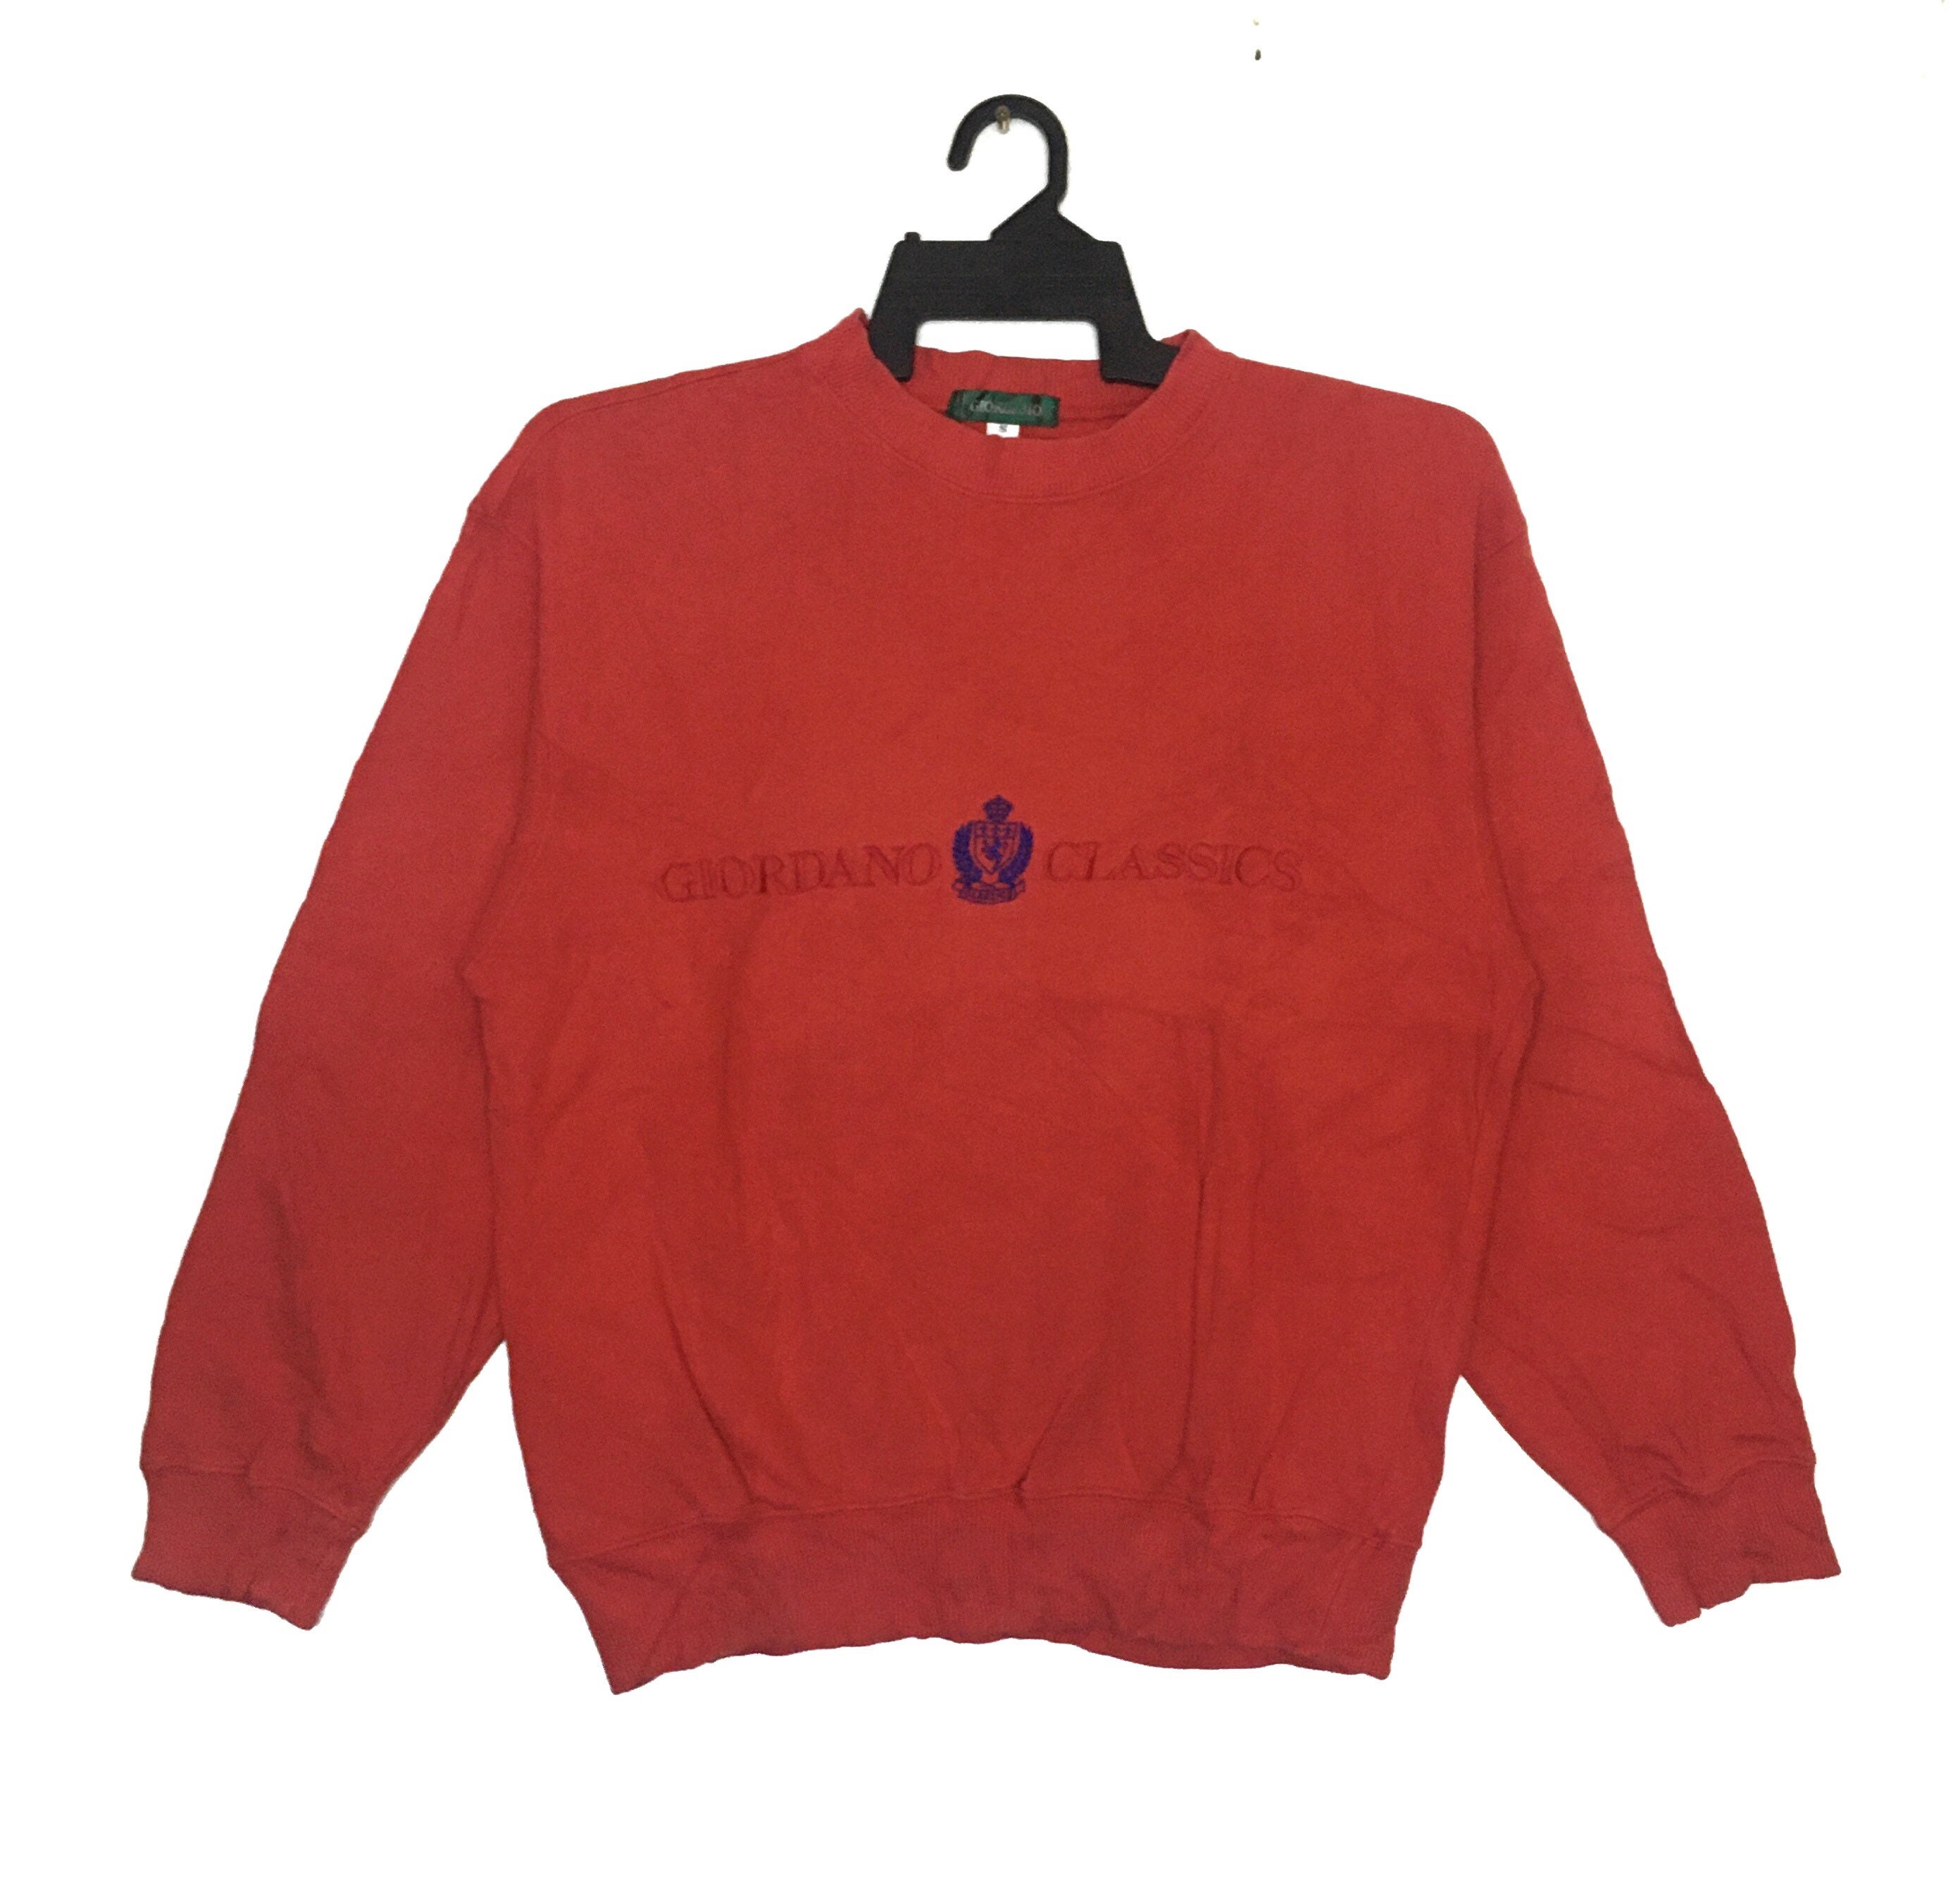 Vintage 90's Giordano Classic Sweatshirt Big Logo | Etsy